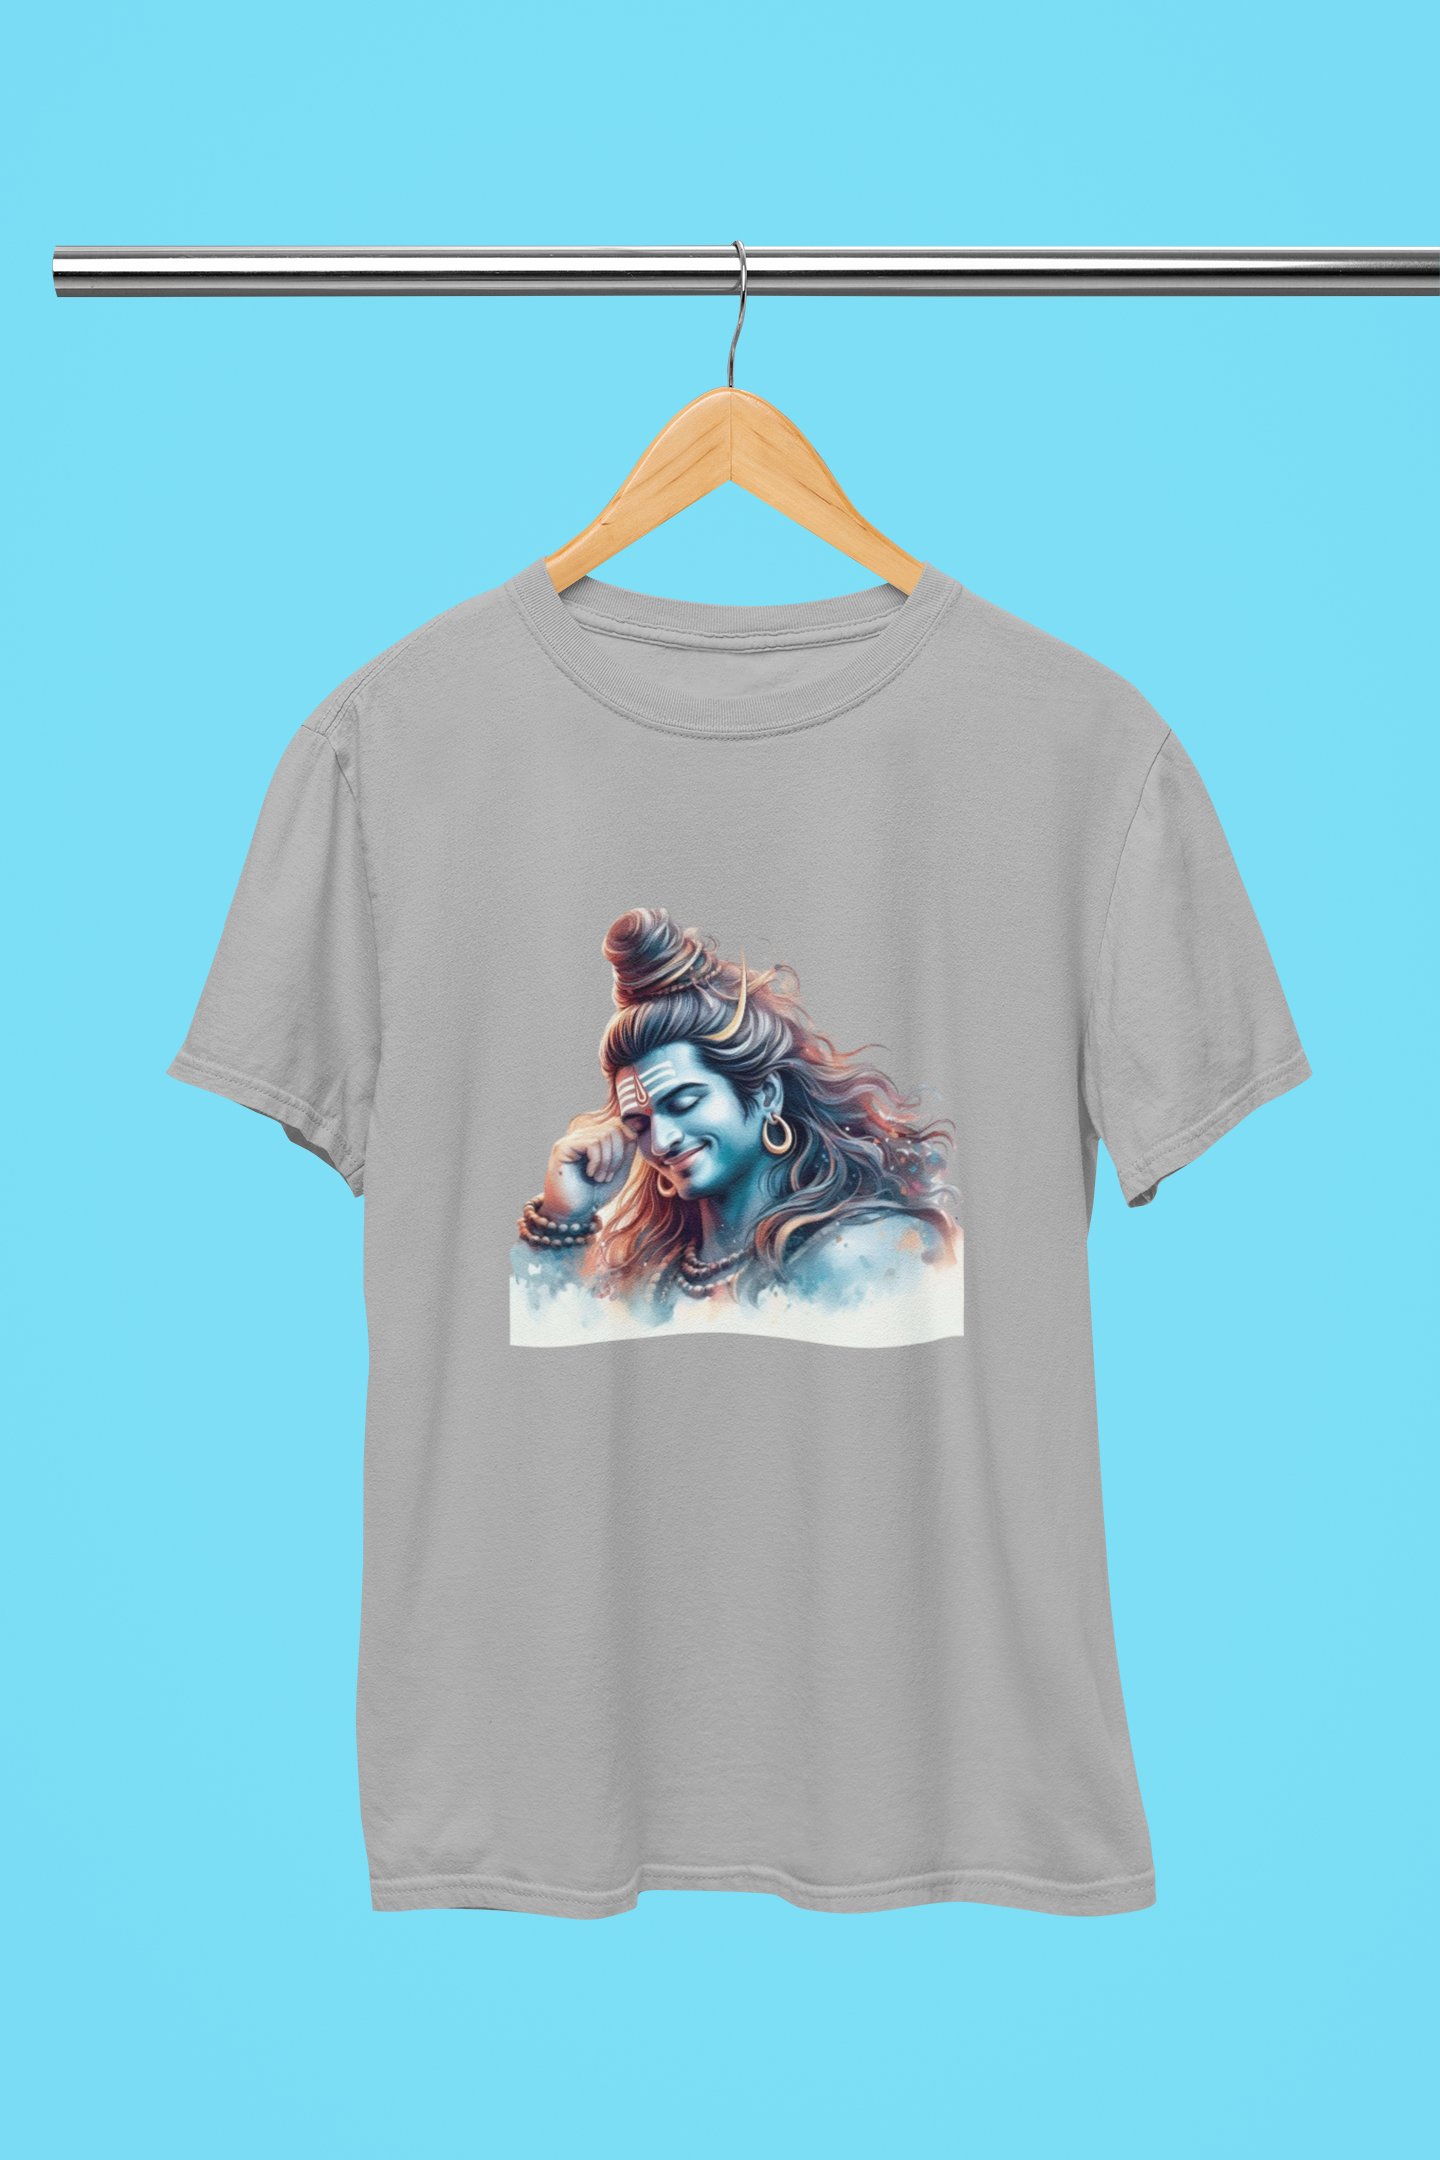 Happy Shivaratri Lord Shiva T-Shirt